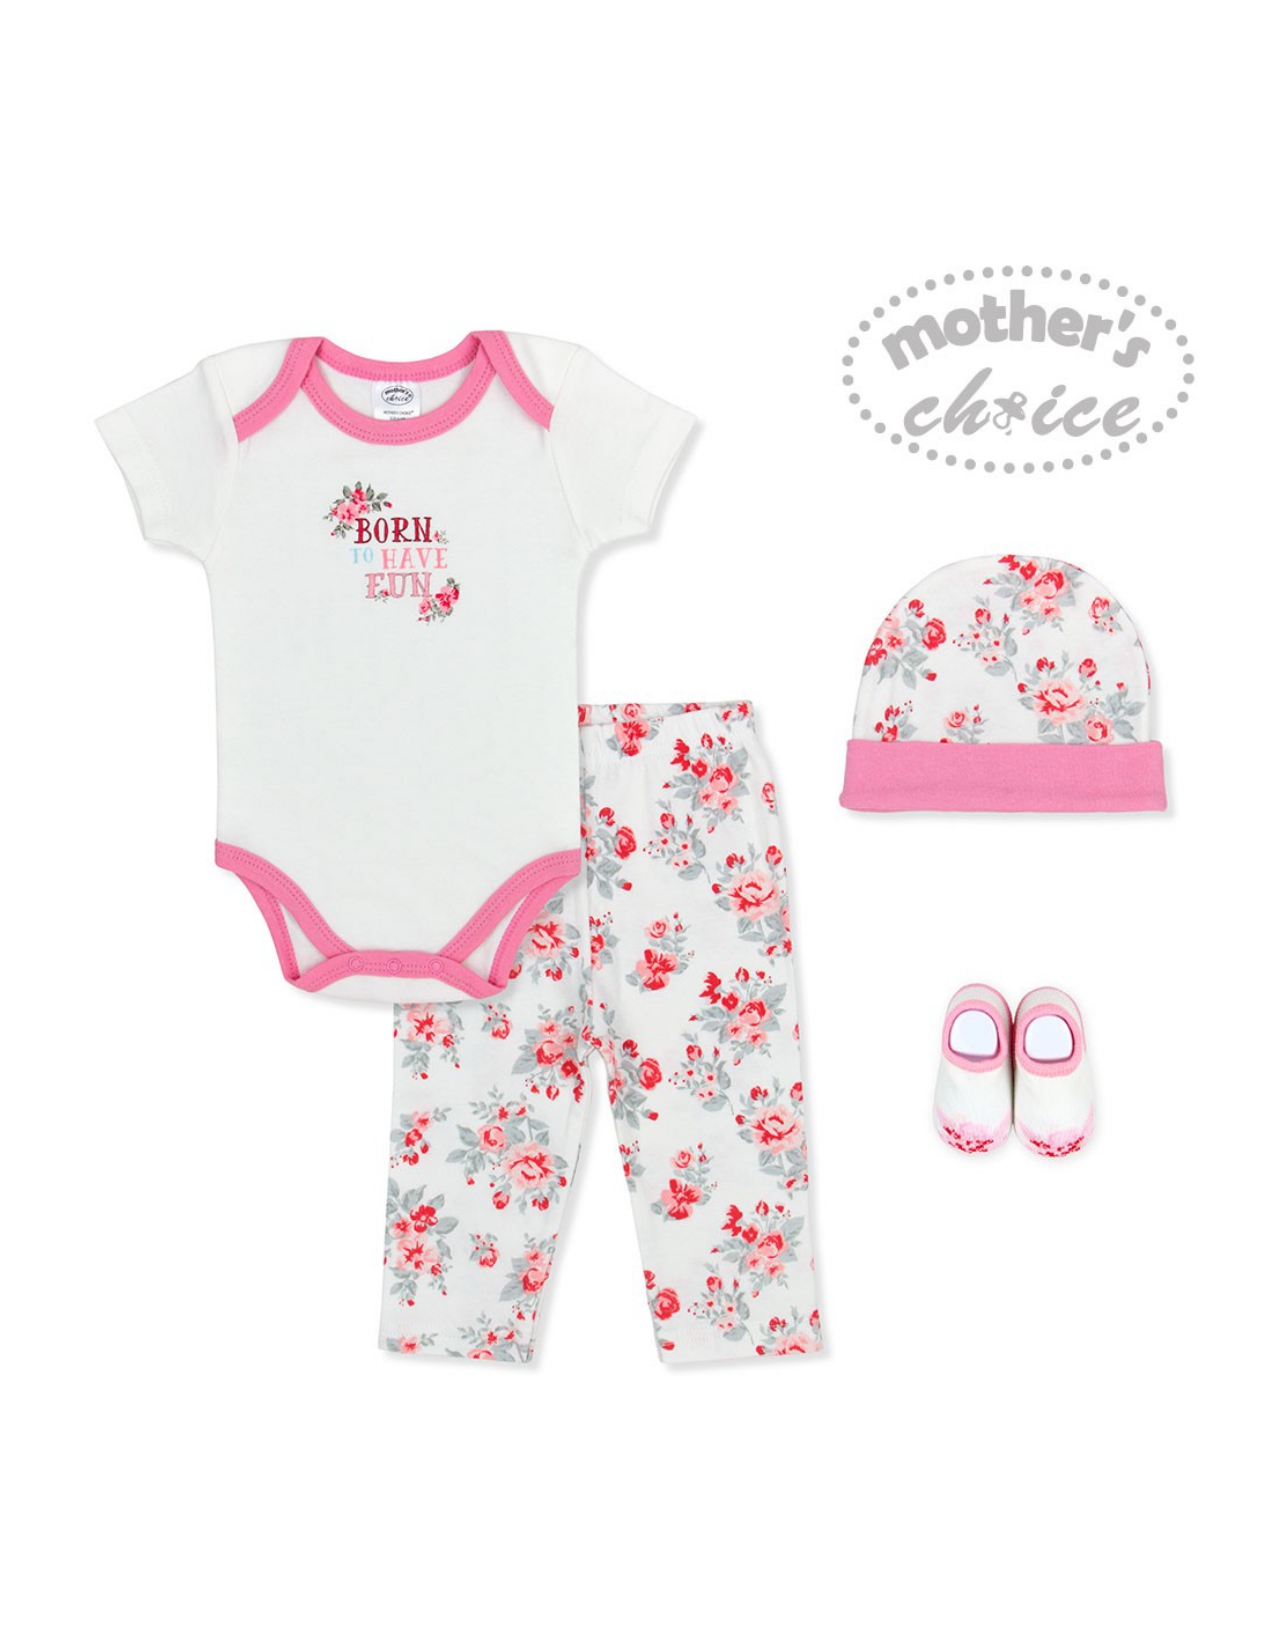 Mother's Choice Newborn 4 pcs Boxed Gift Set (White/Pink)